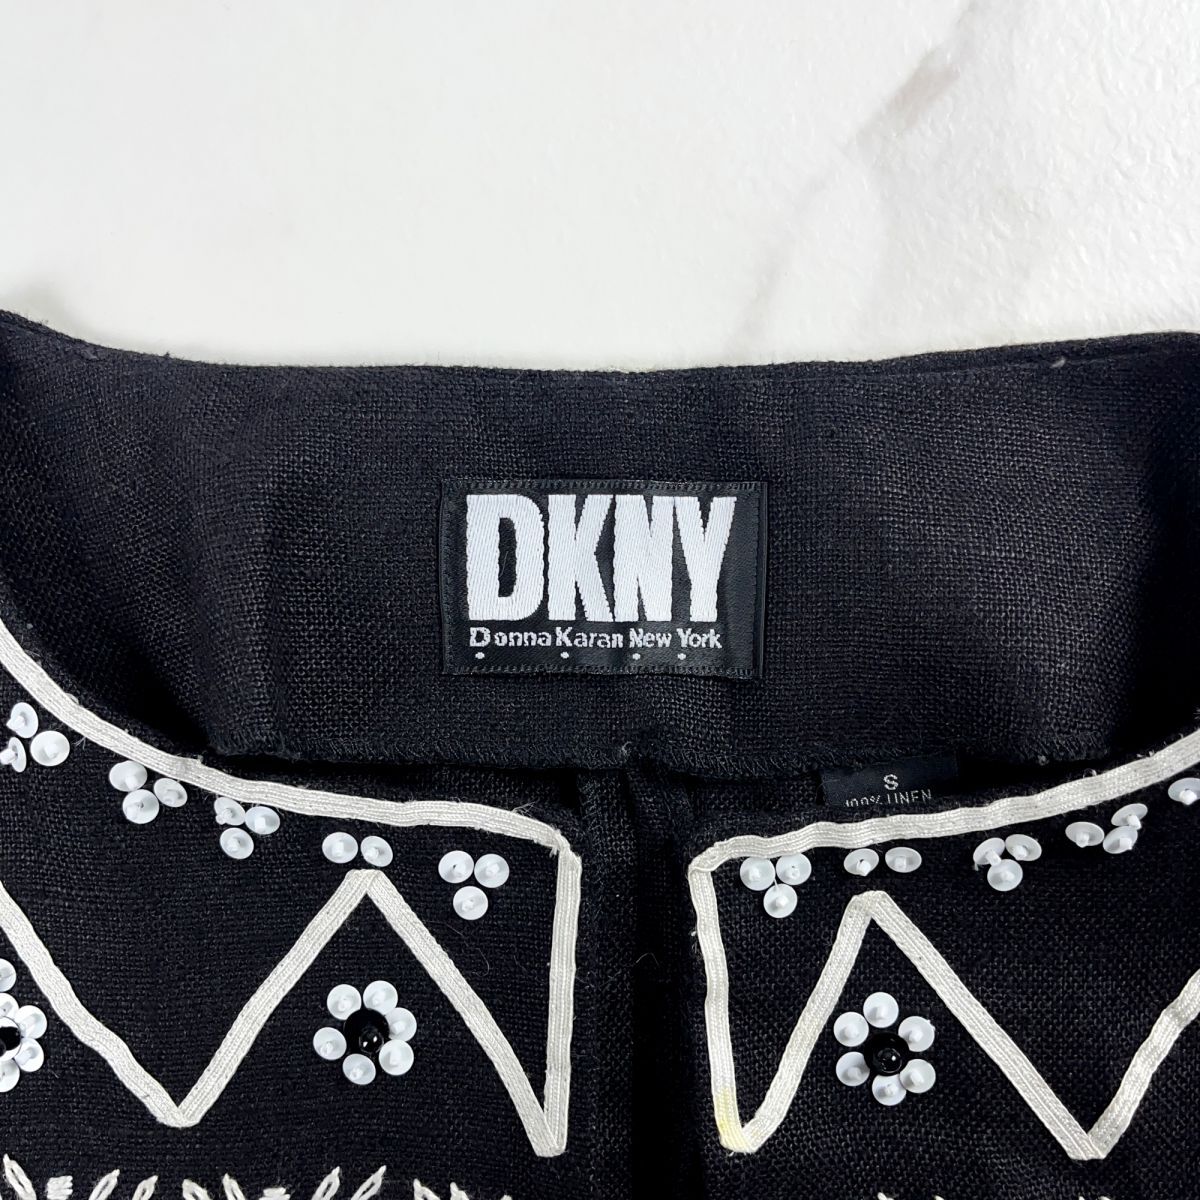 DKNY Donna Karan New York linen fringe spangled embroidery long sleeve cardigan tops lady's black black size S*MC67